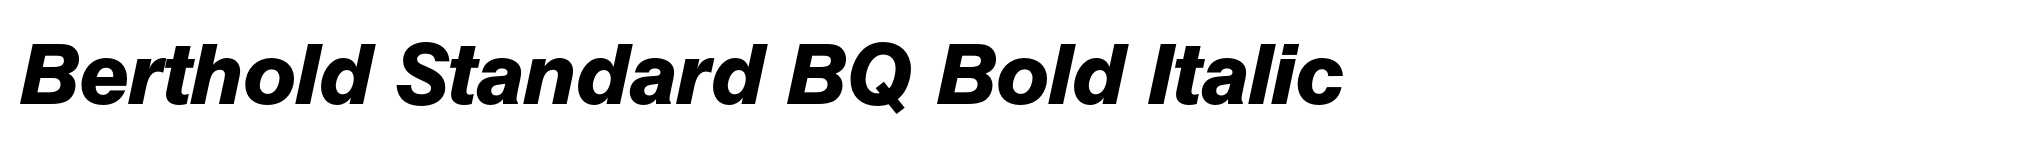 Berthold Standard BQ Bold Italic image